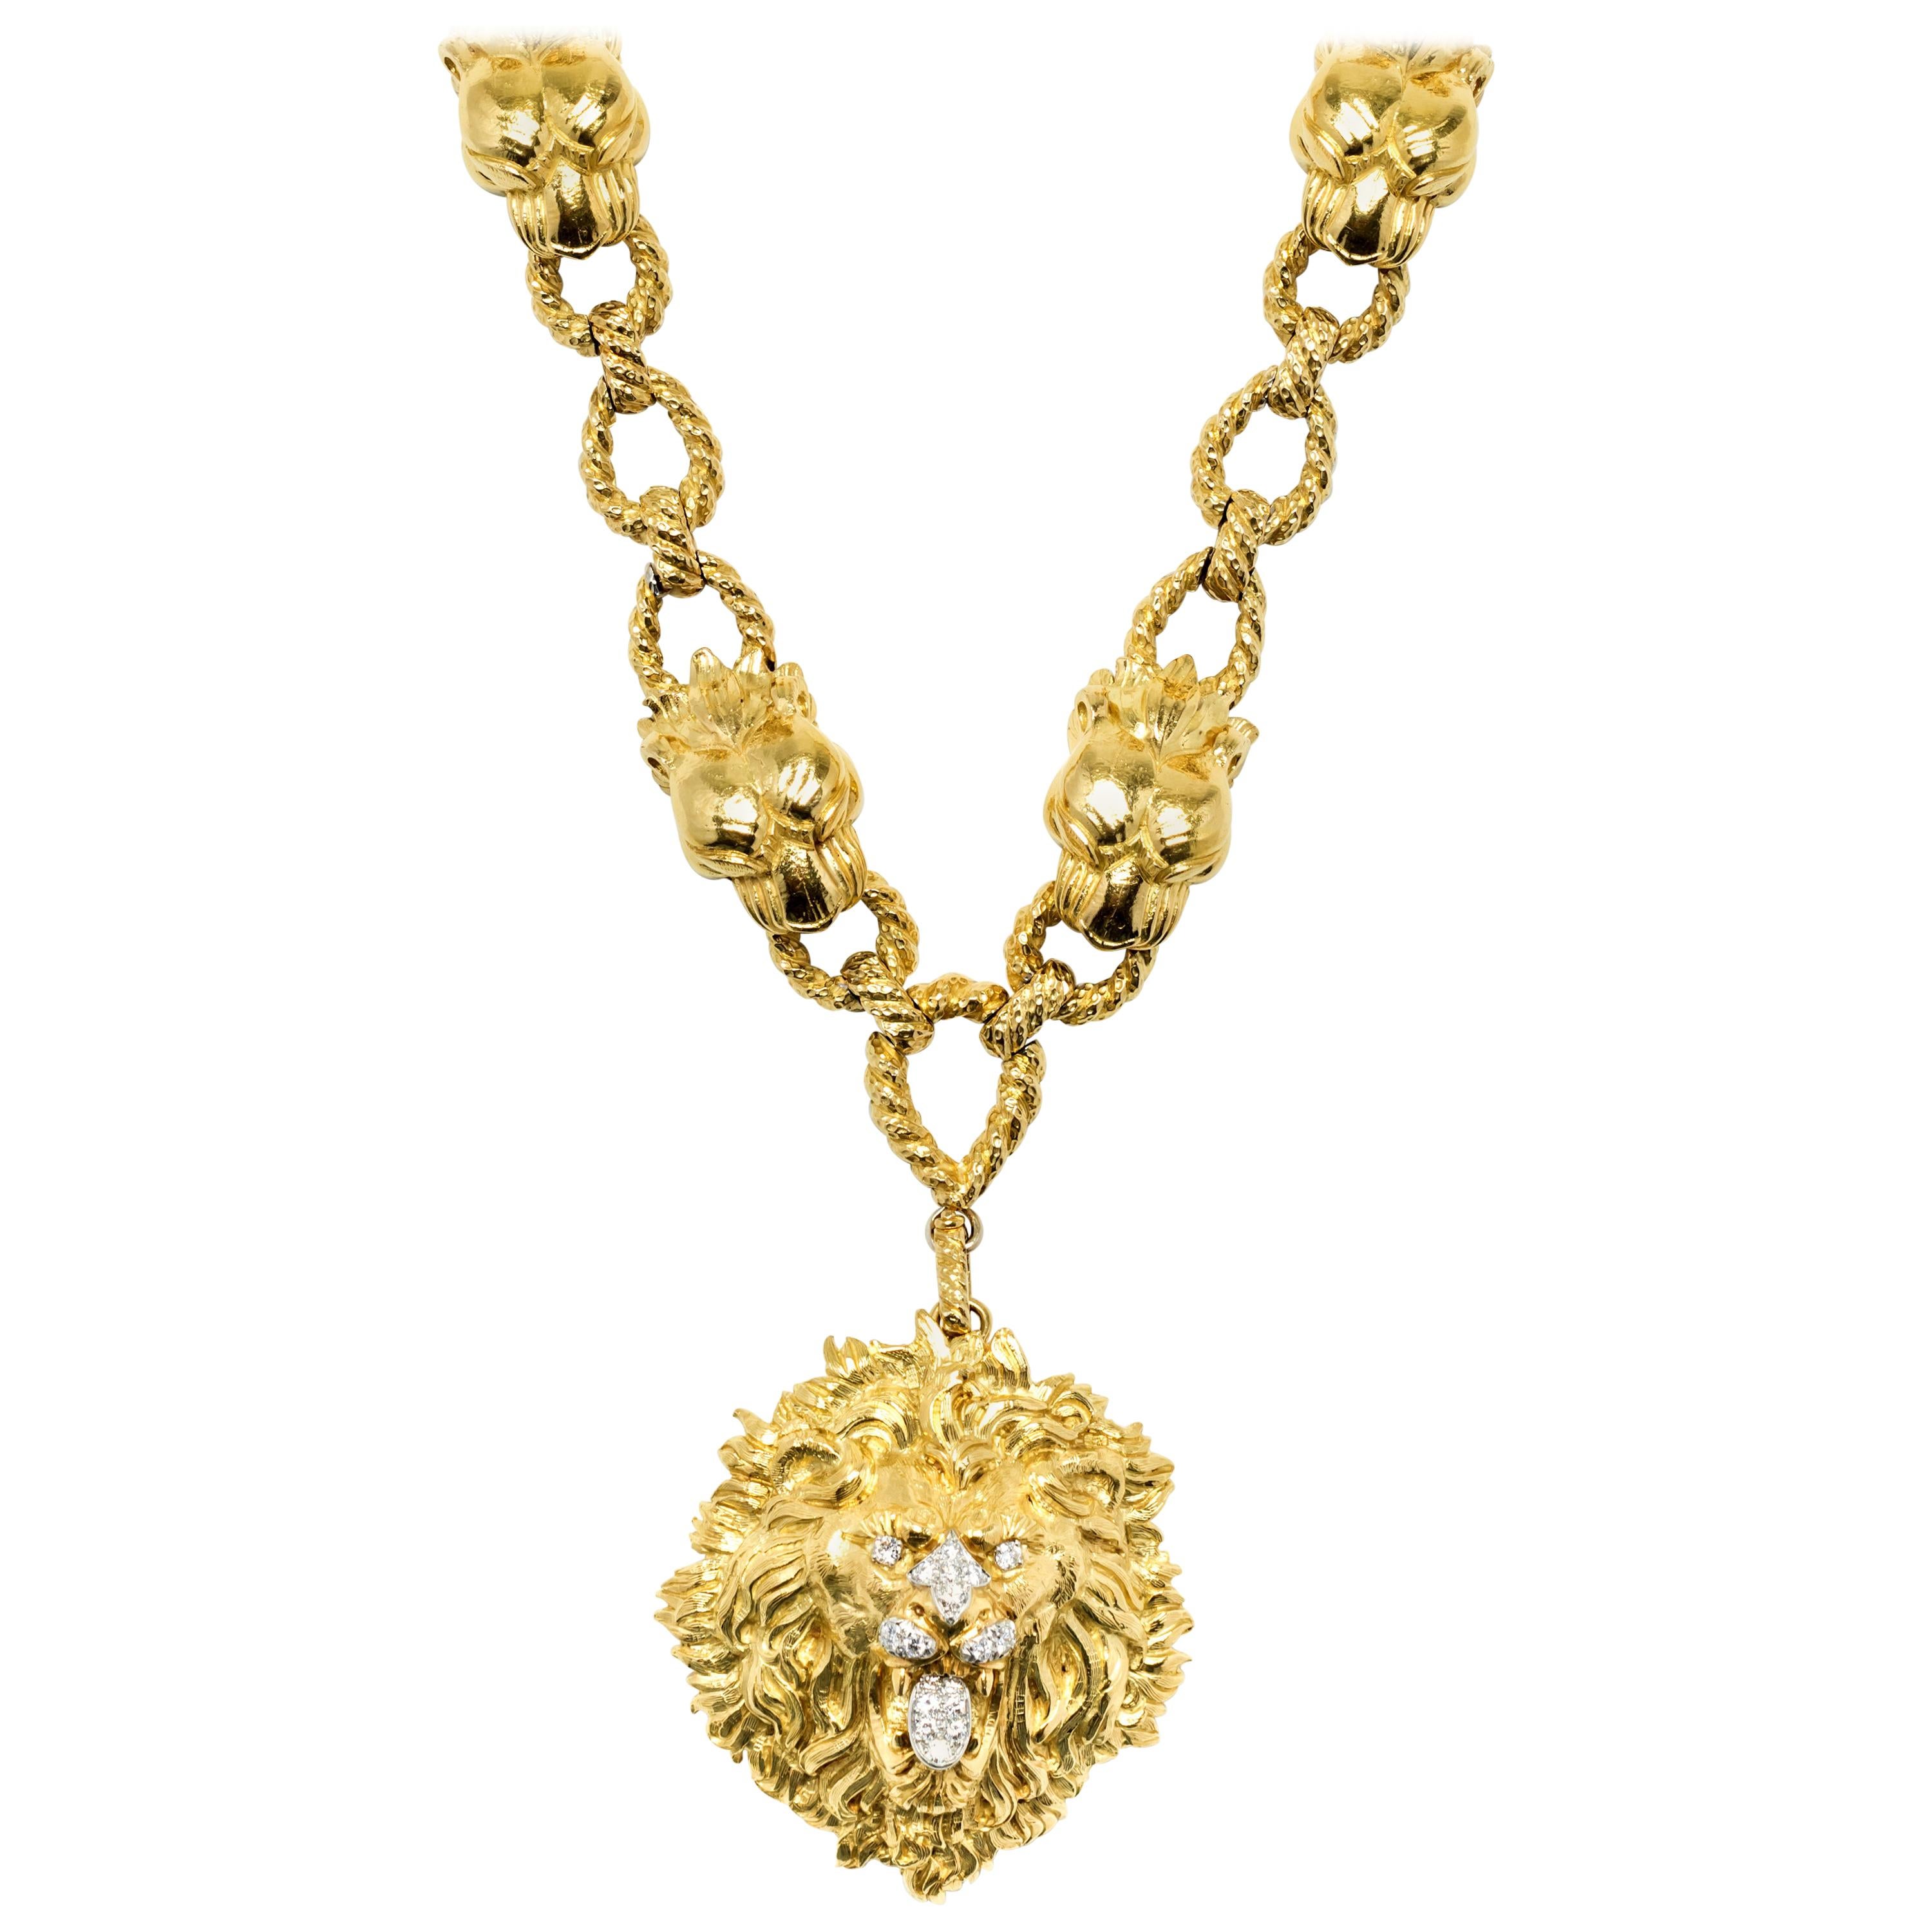 David Webb 18 Karat Gold Necklace with Lion Head Pendant, circa 1965